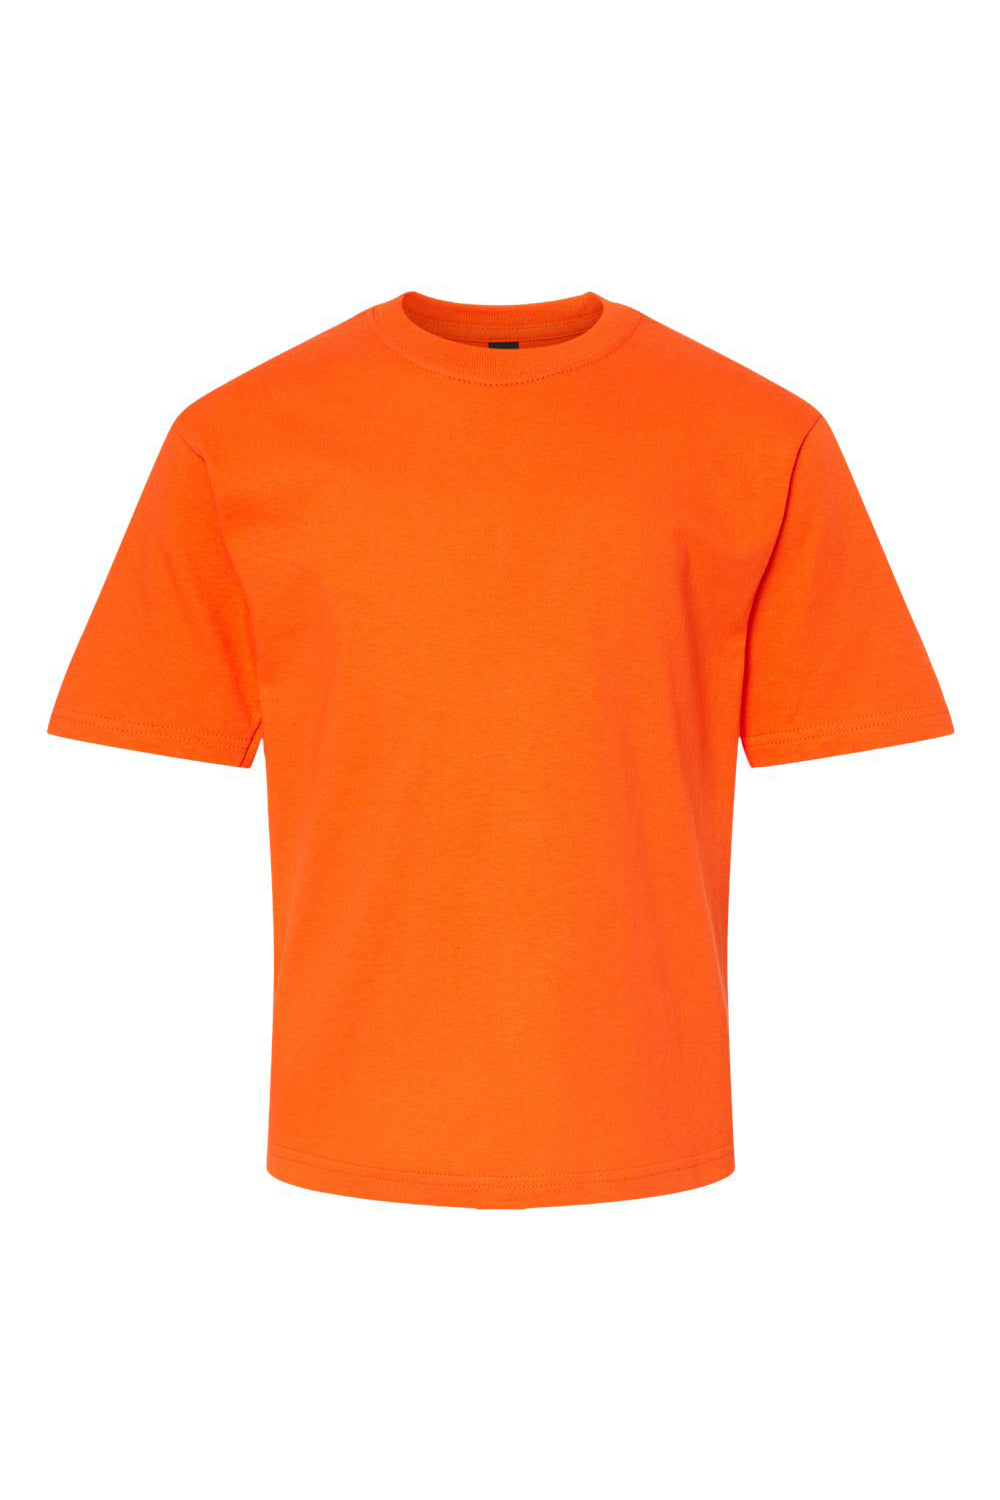 M&O 4850 Youth Gold Soft Touch Short Sleeve Crewneck T-Shirt Orange Flat Front